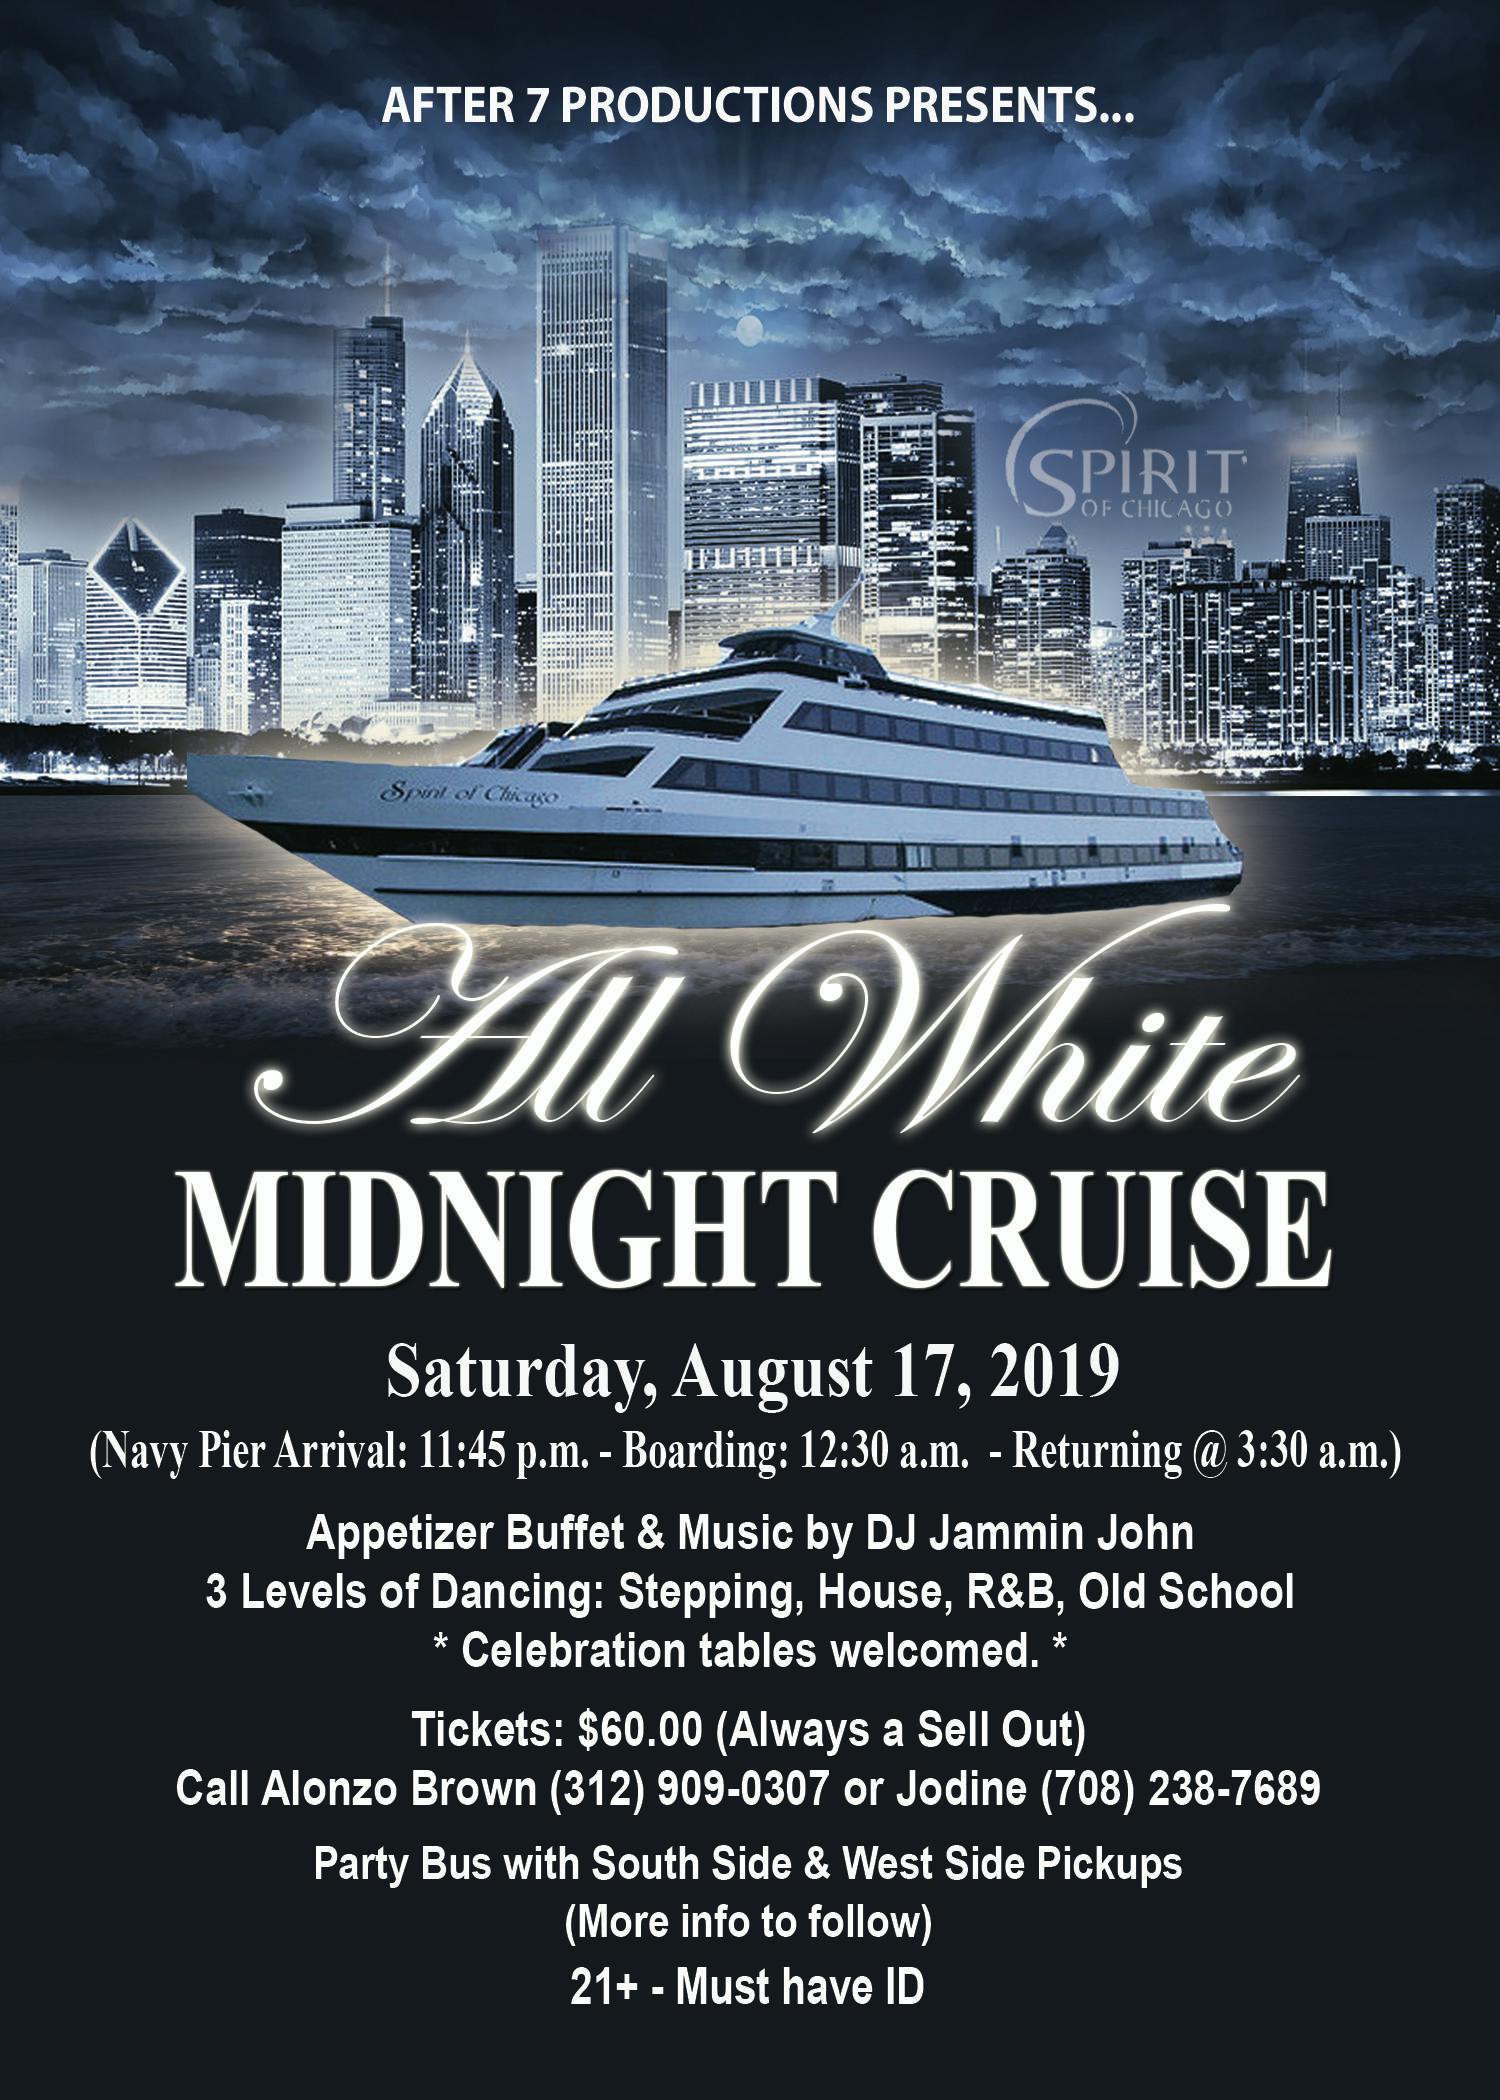 All White Midnight Cruise (Spirit of Chicago)